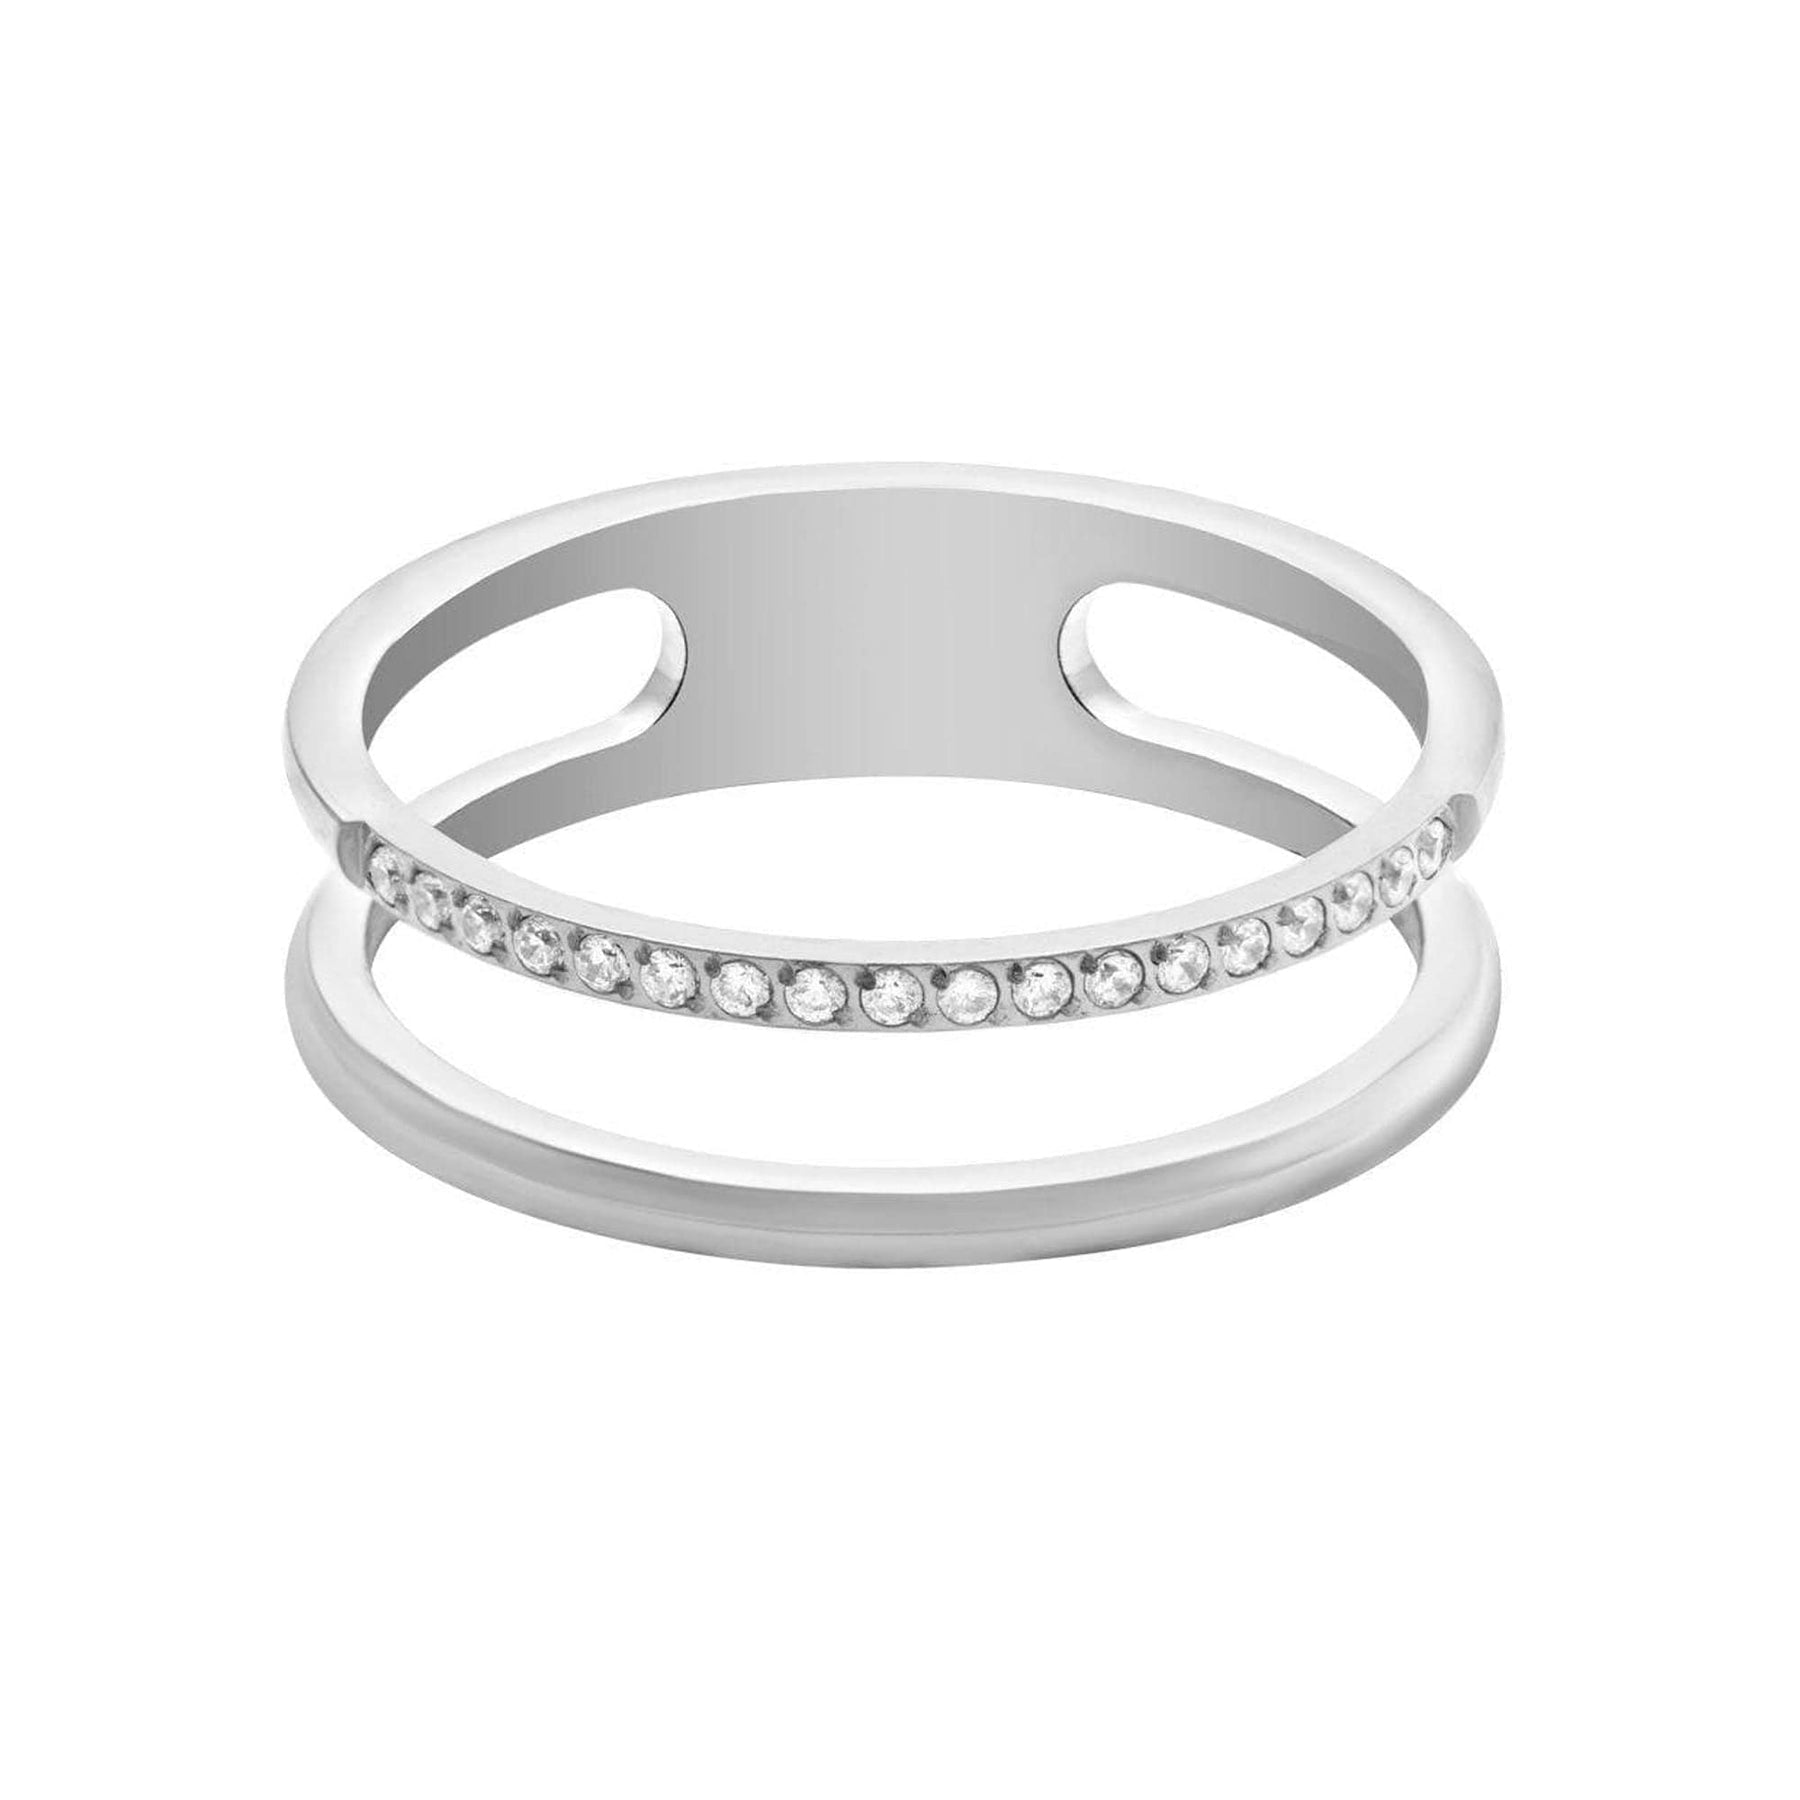 BohoMoon Stainless Steel Arabella Ring Silver / US 4 / UK H / EUR 46 / (xxsmall)